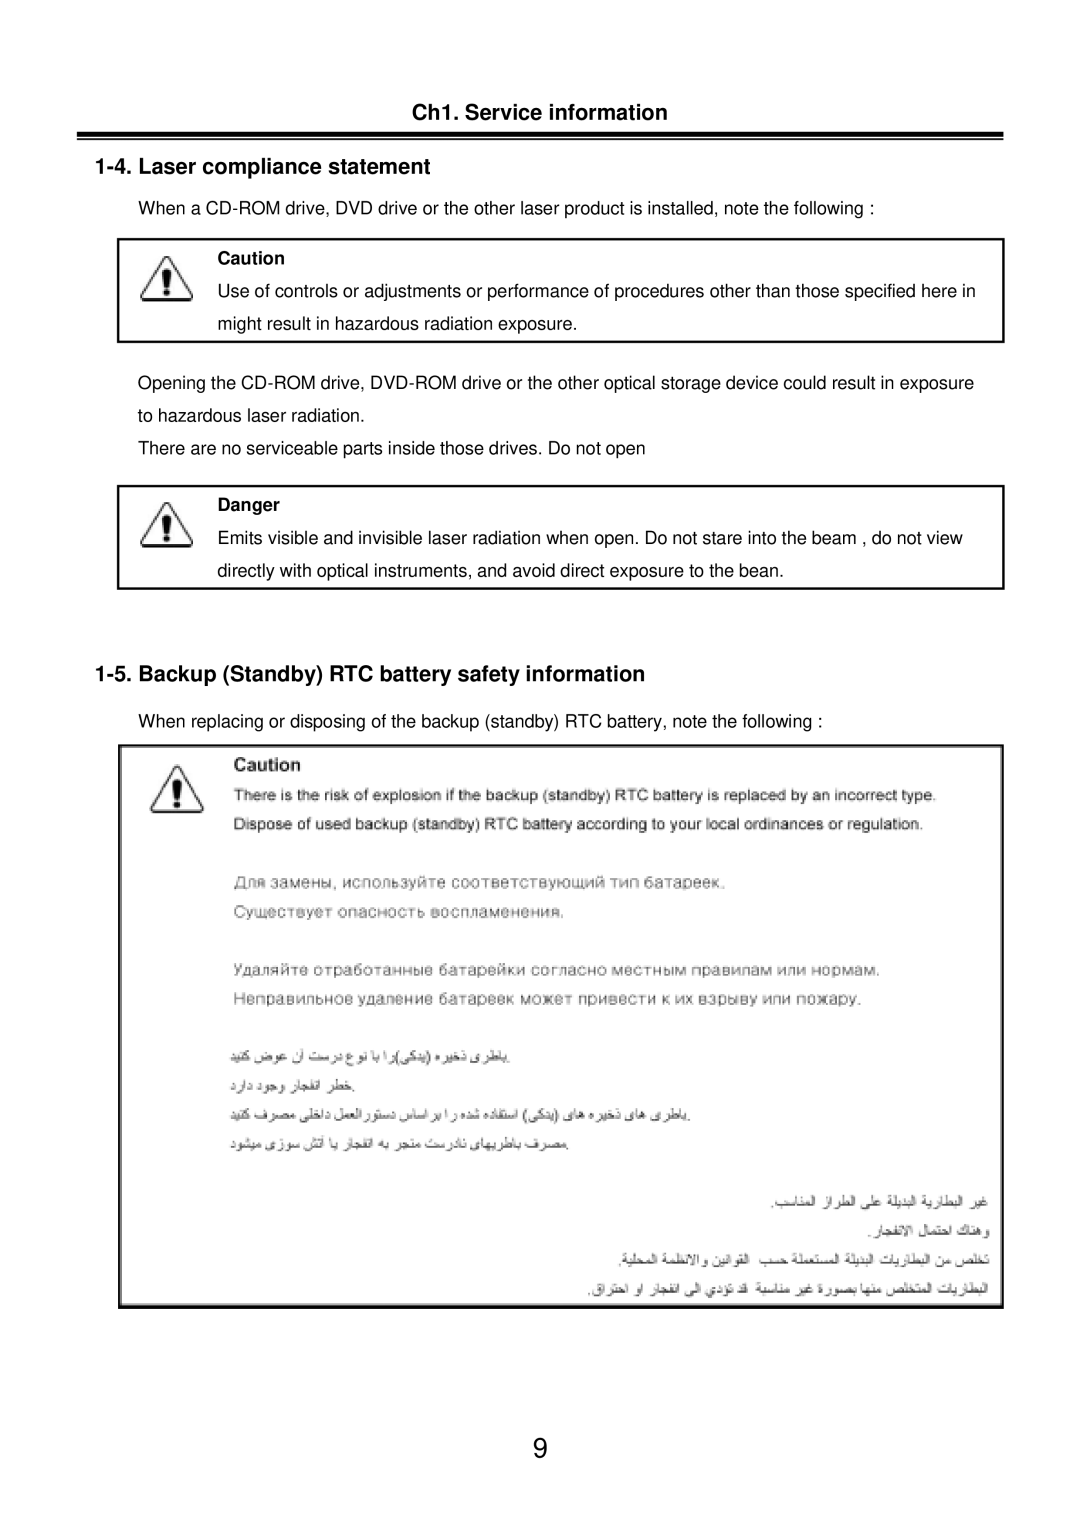 LG Electronics LM50 service manual Ch1. Service information 1-4. Laser compliance statement, Danger 